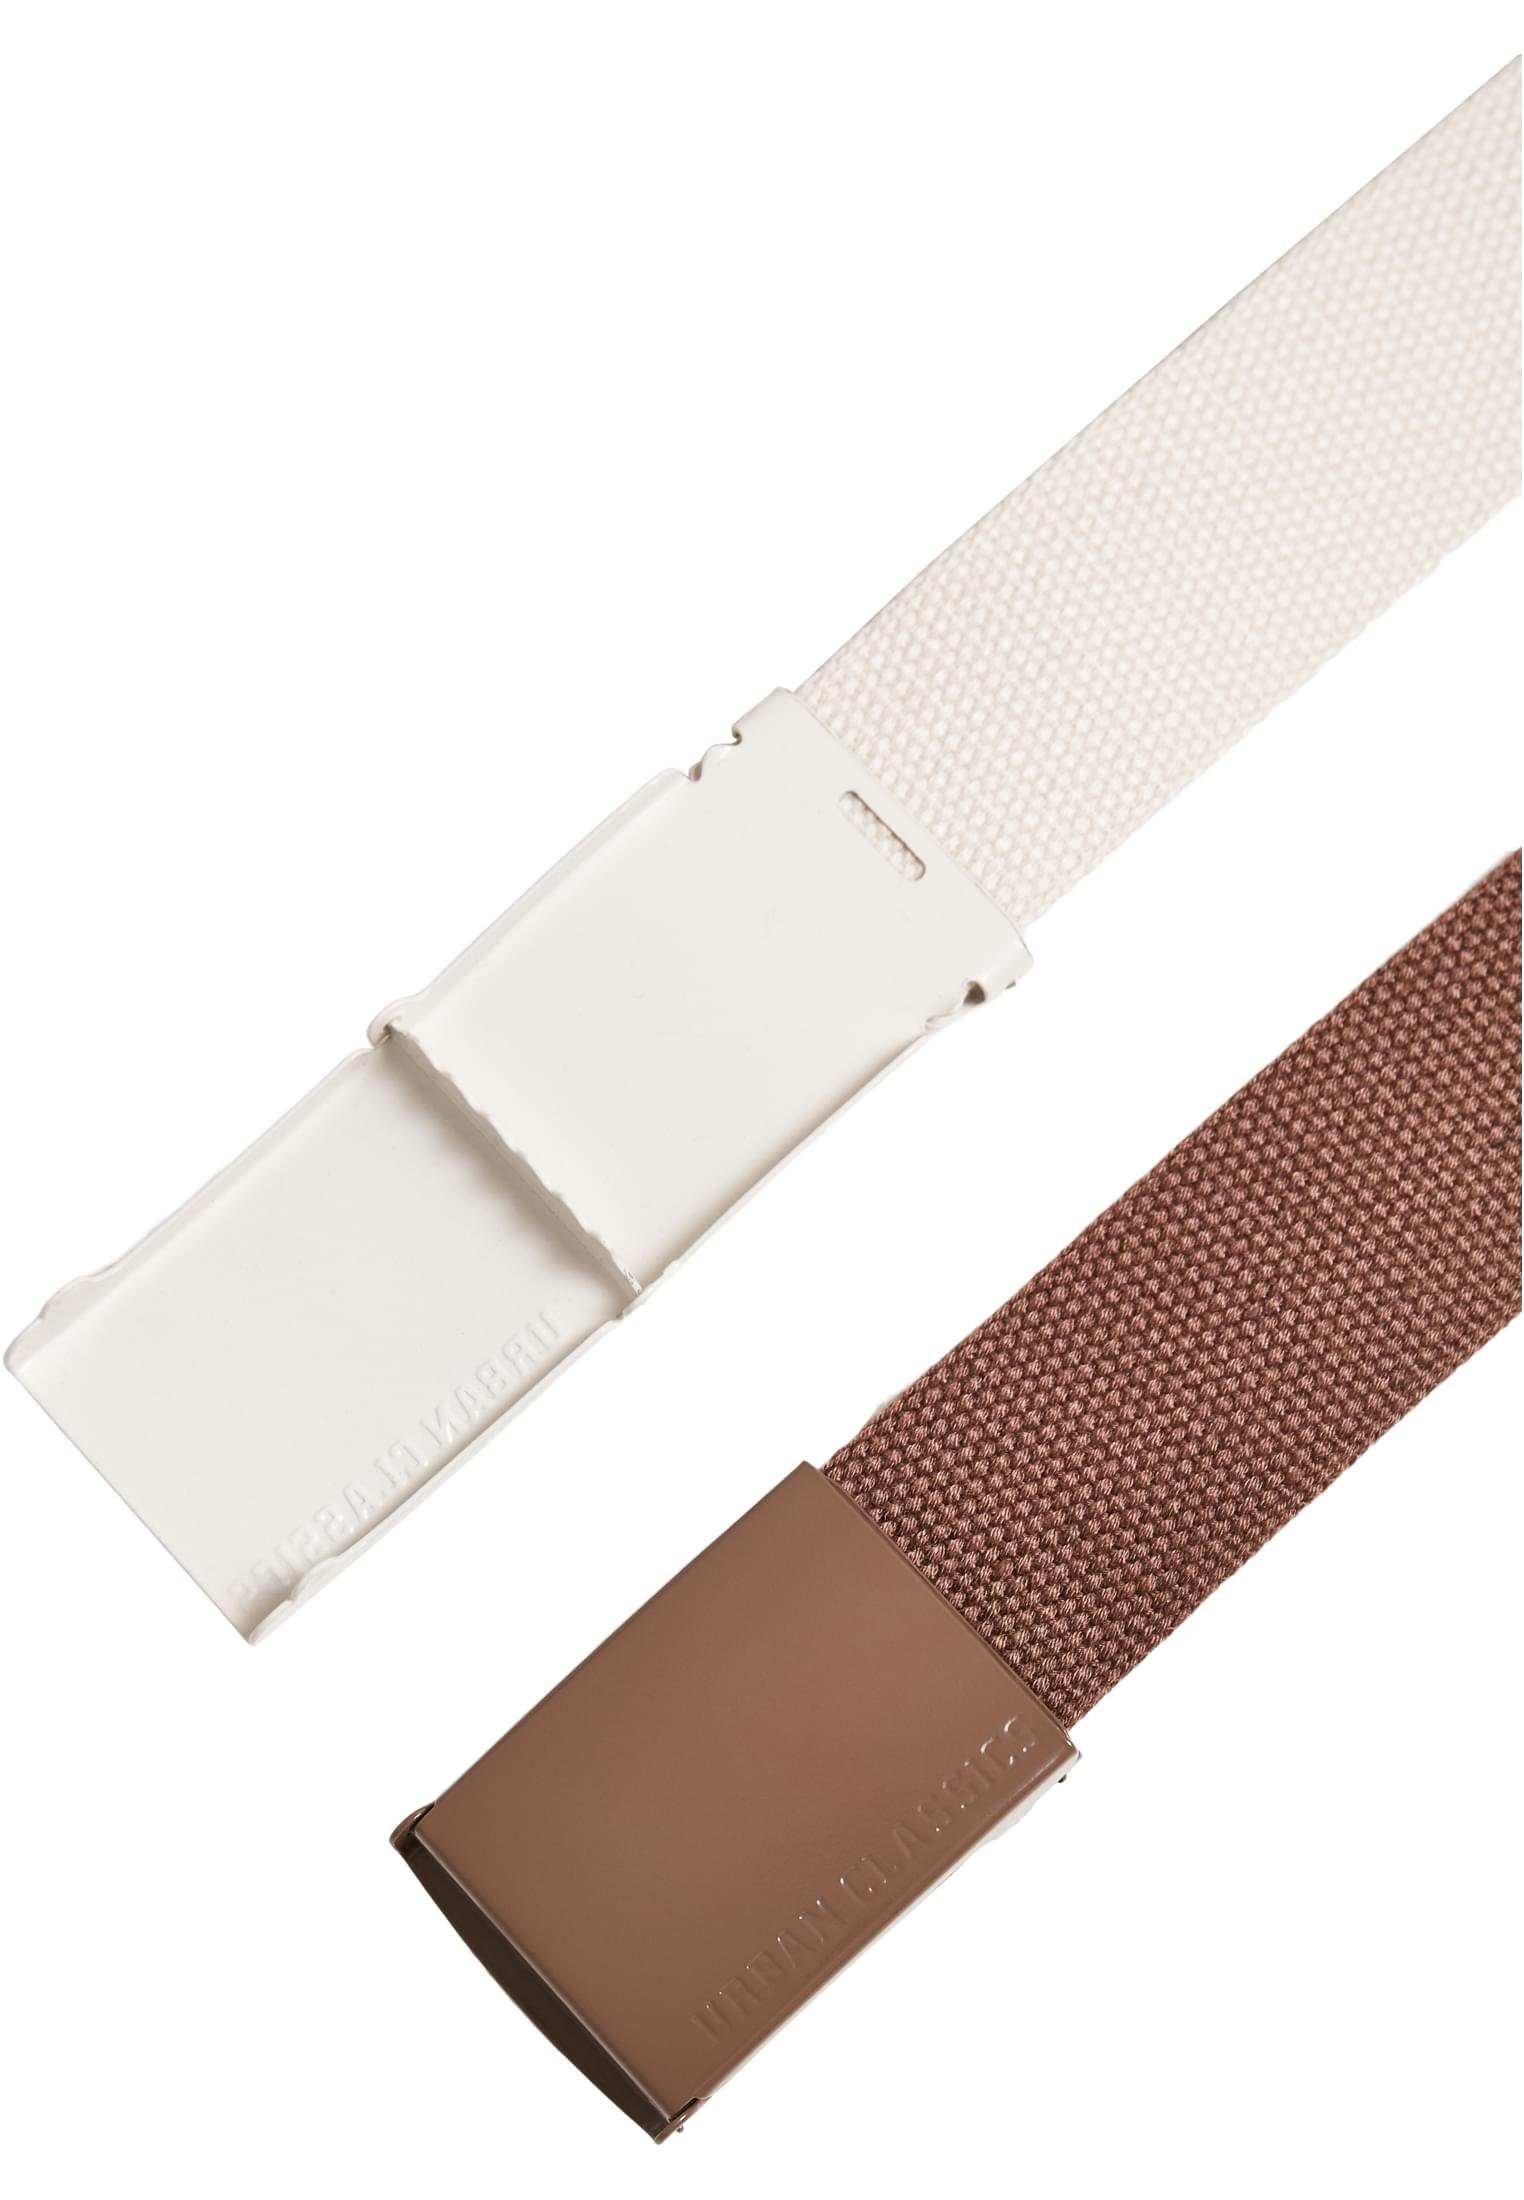 URBAN CLASSICS Hüftgürtel Colored Buckle Belt Accessoires Canvas bark-whitesand 2-Pack